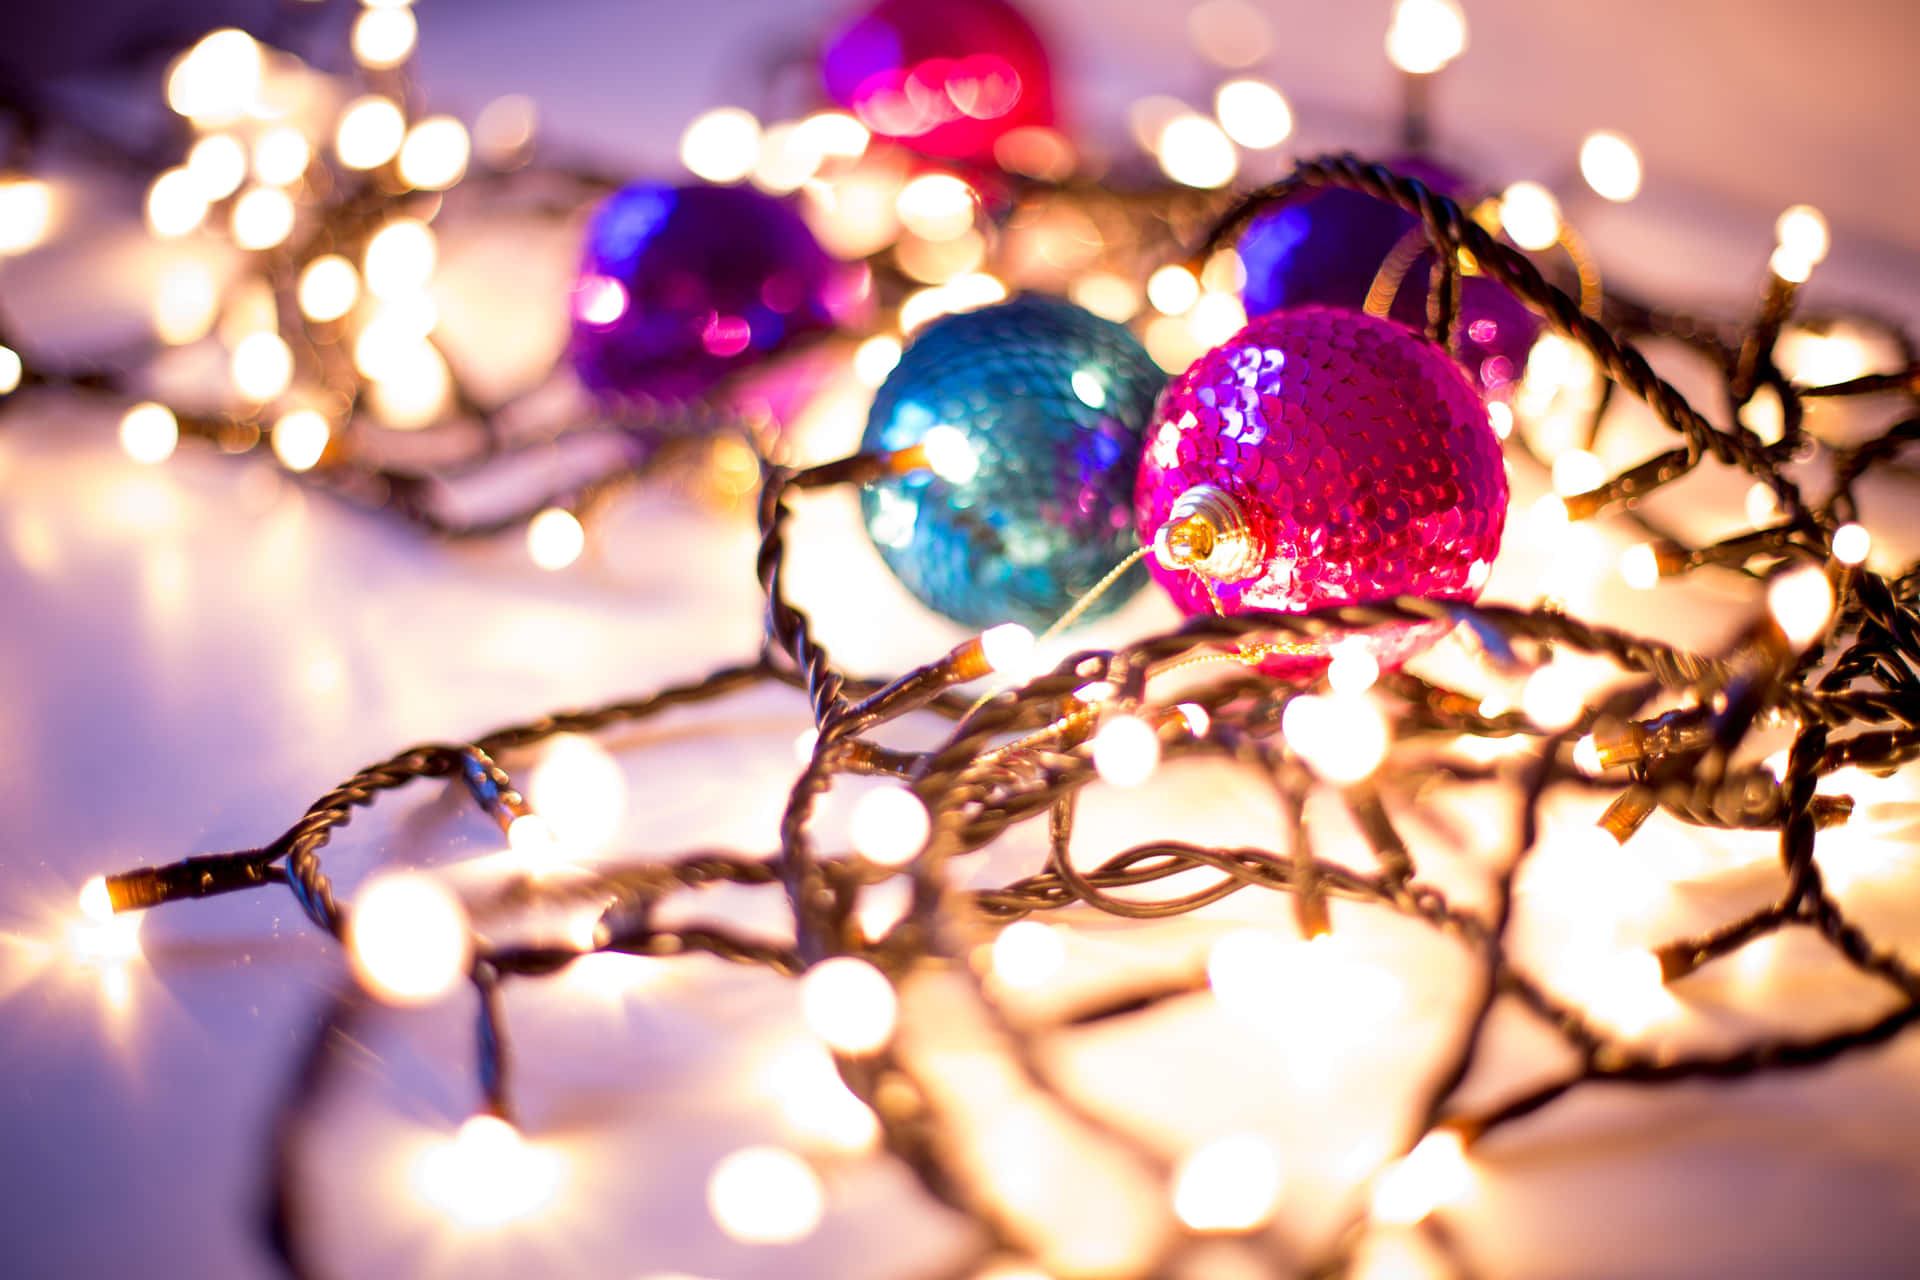 Enjoy the holiday season with beautiful Christmas lights!